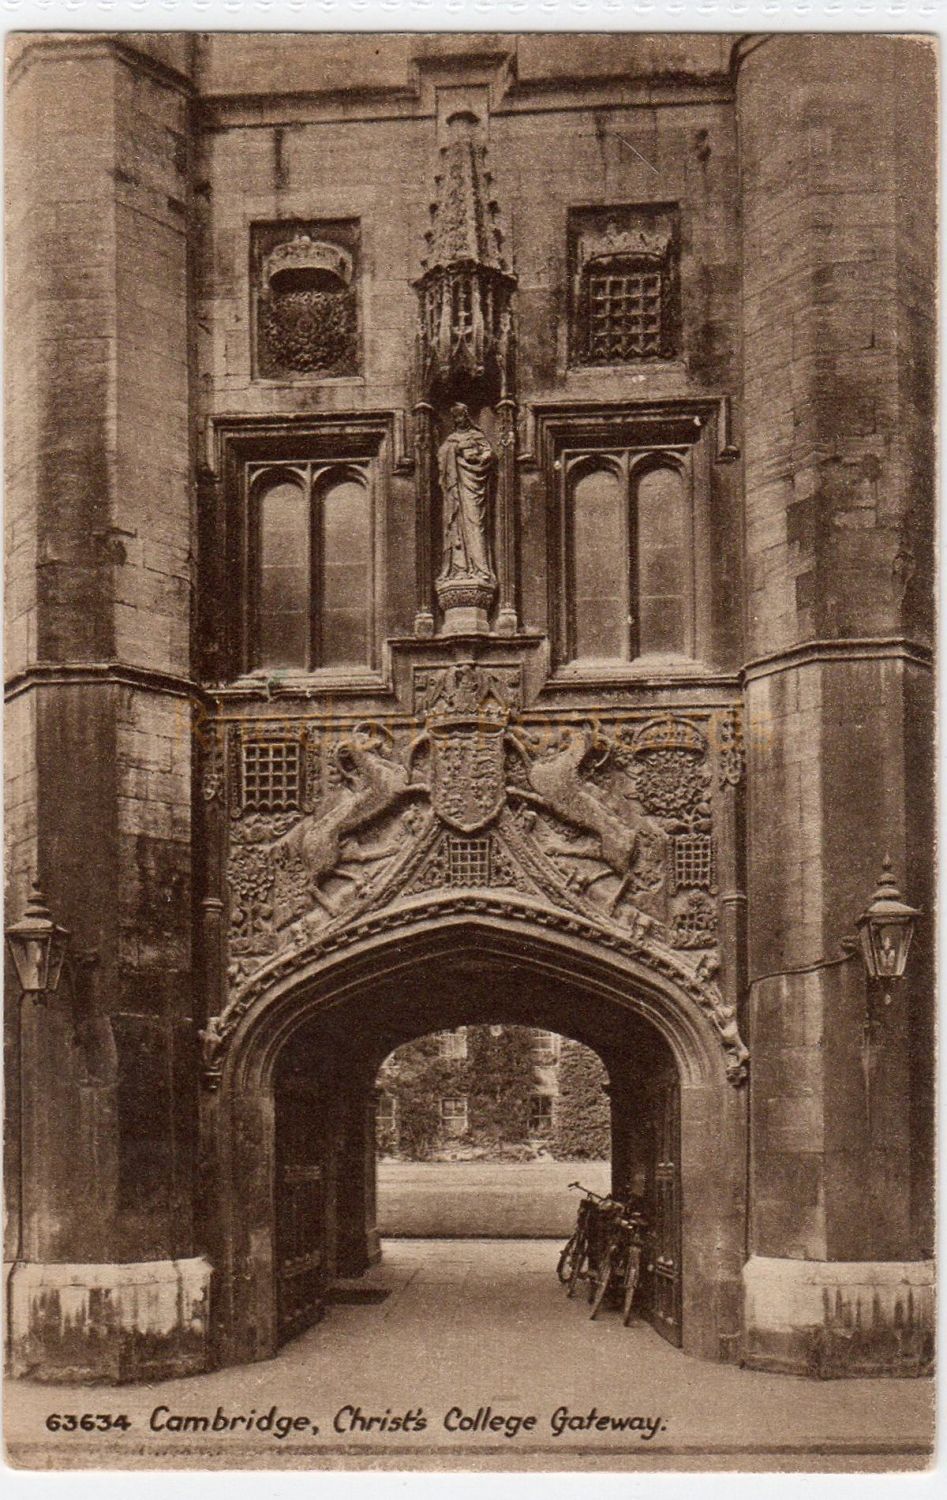 Christs College Gateway, Cambridge. Friths Series Postcard 